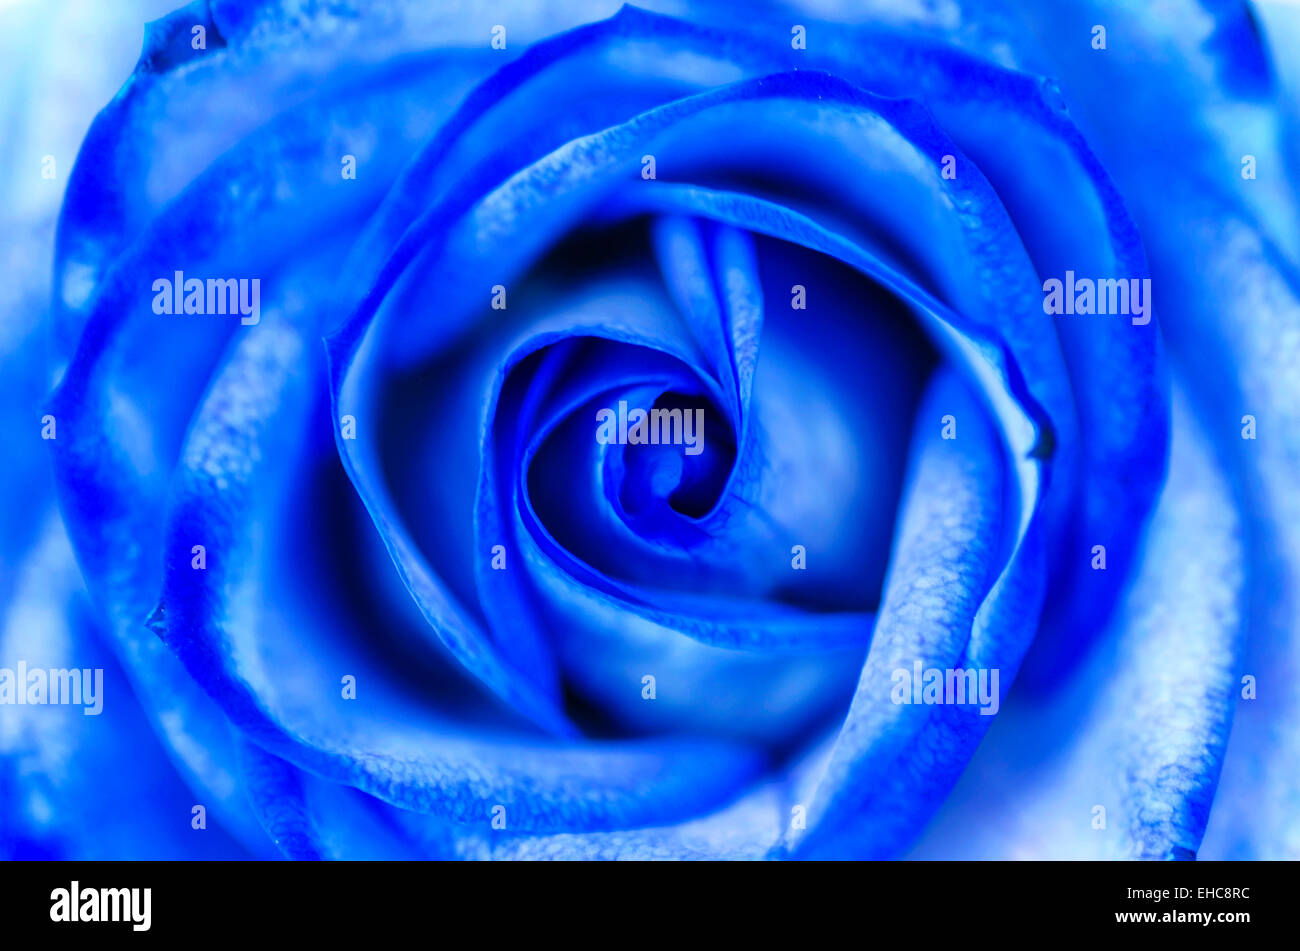 Abstract Blue Rose Close Up Macro Stock Photo